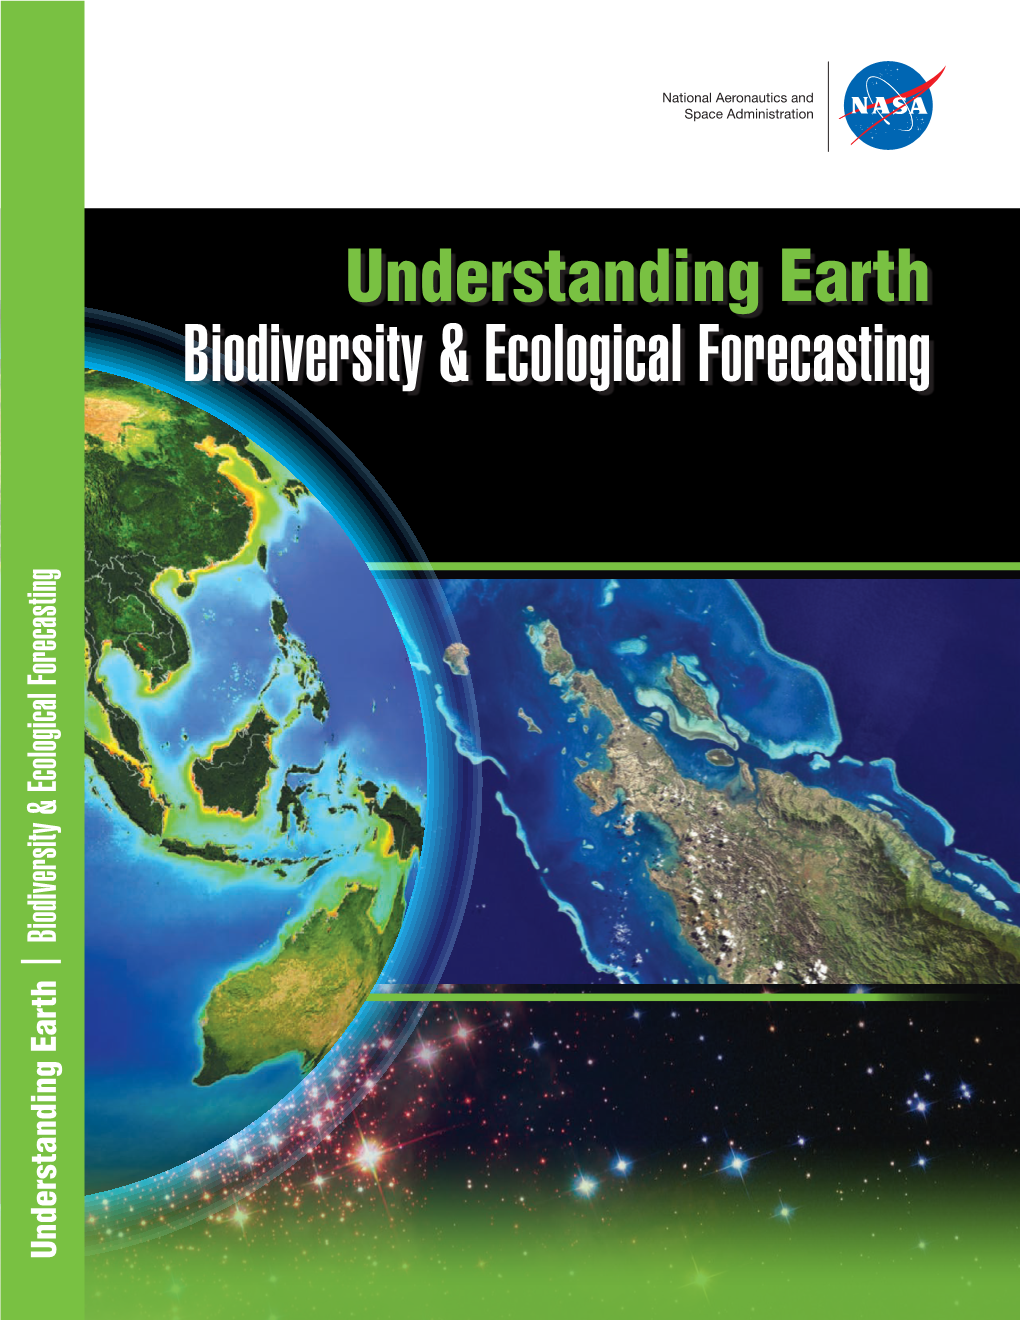 Understanding Earth: Biodiversity & Ecological Forecasting